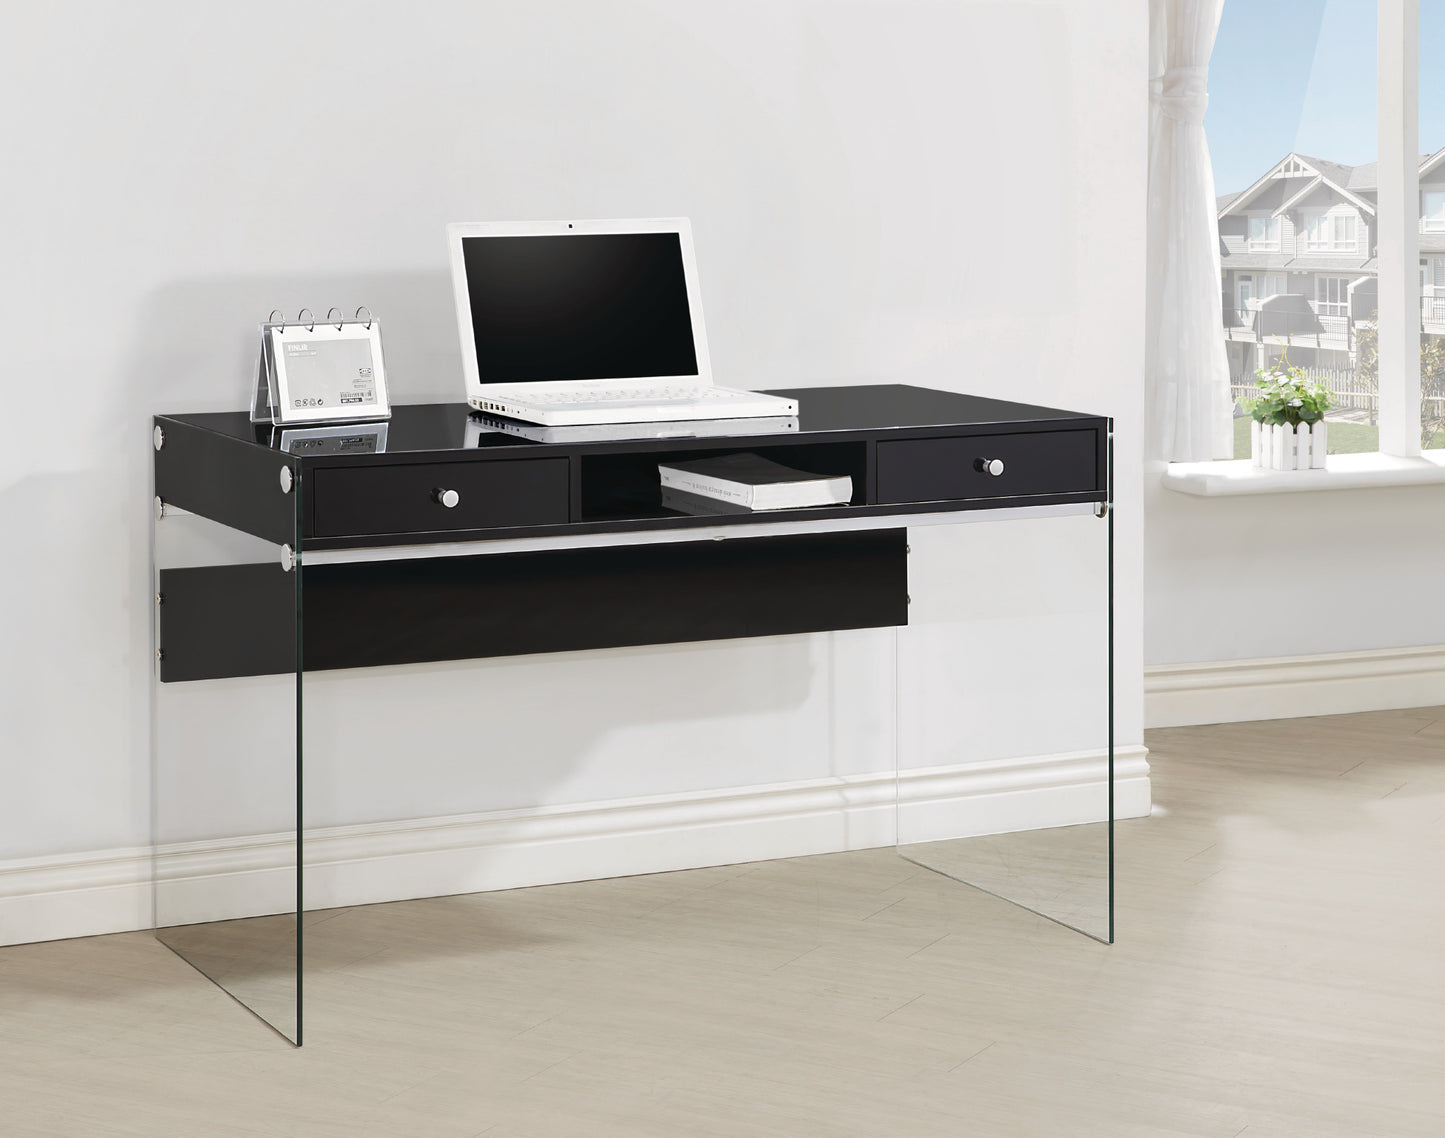 OF6409 - Office Desk